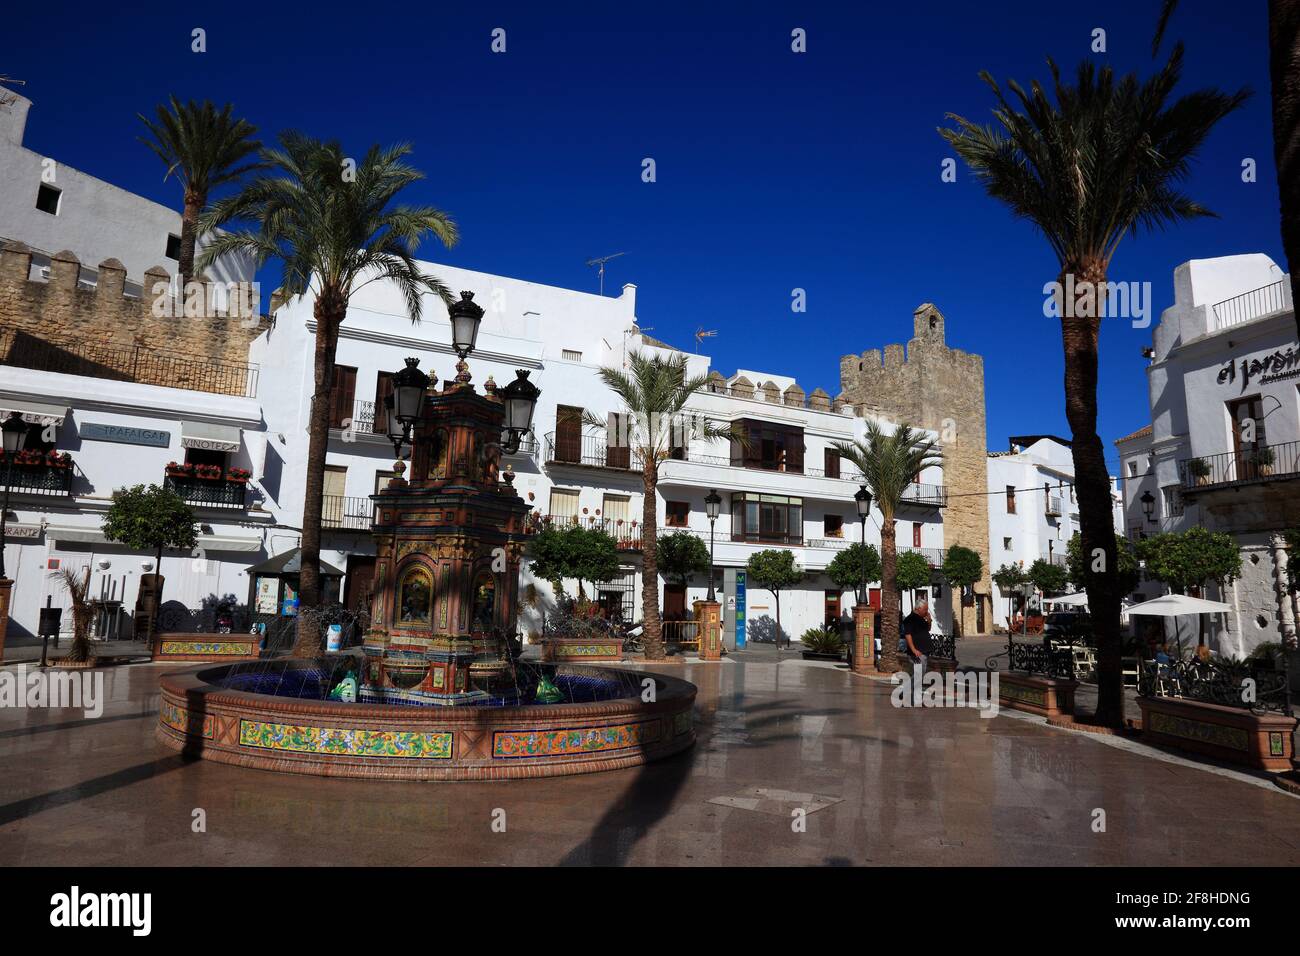 Spain, Andalusia, Vejer de la frontera, white village in Cadiz province, Marketplace with fountains in the old city at the Plaza de Espania Stock Photo